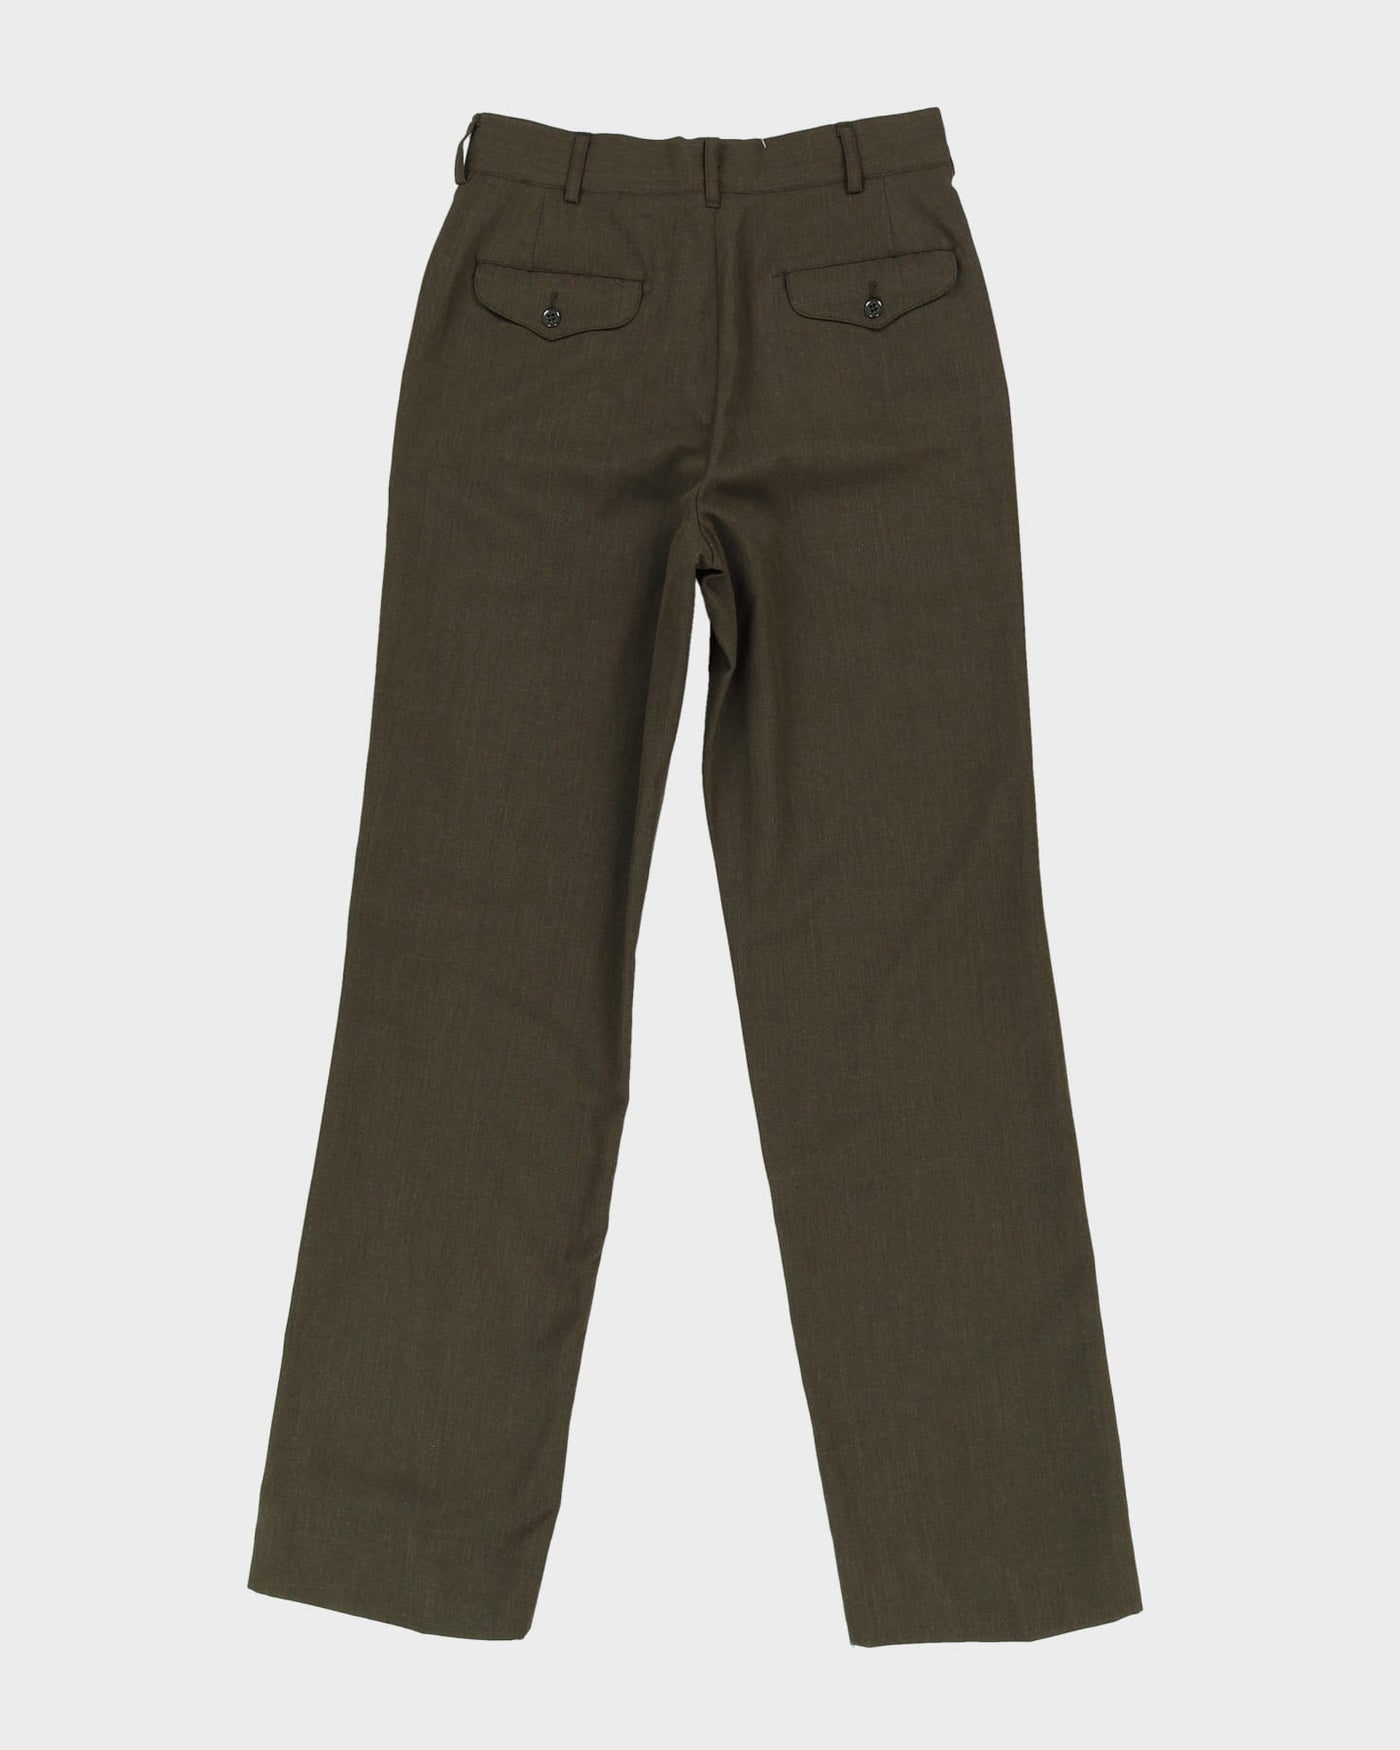 1989 Vintage USMC Poly/Wool Dress Trousers - 30x35